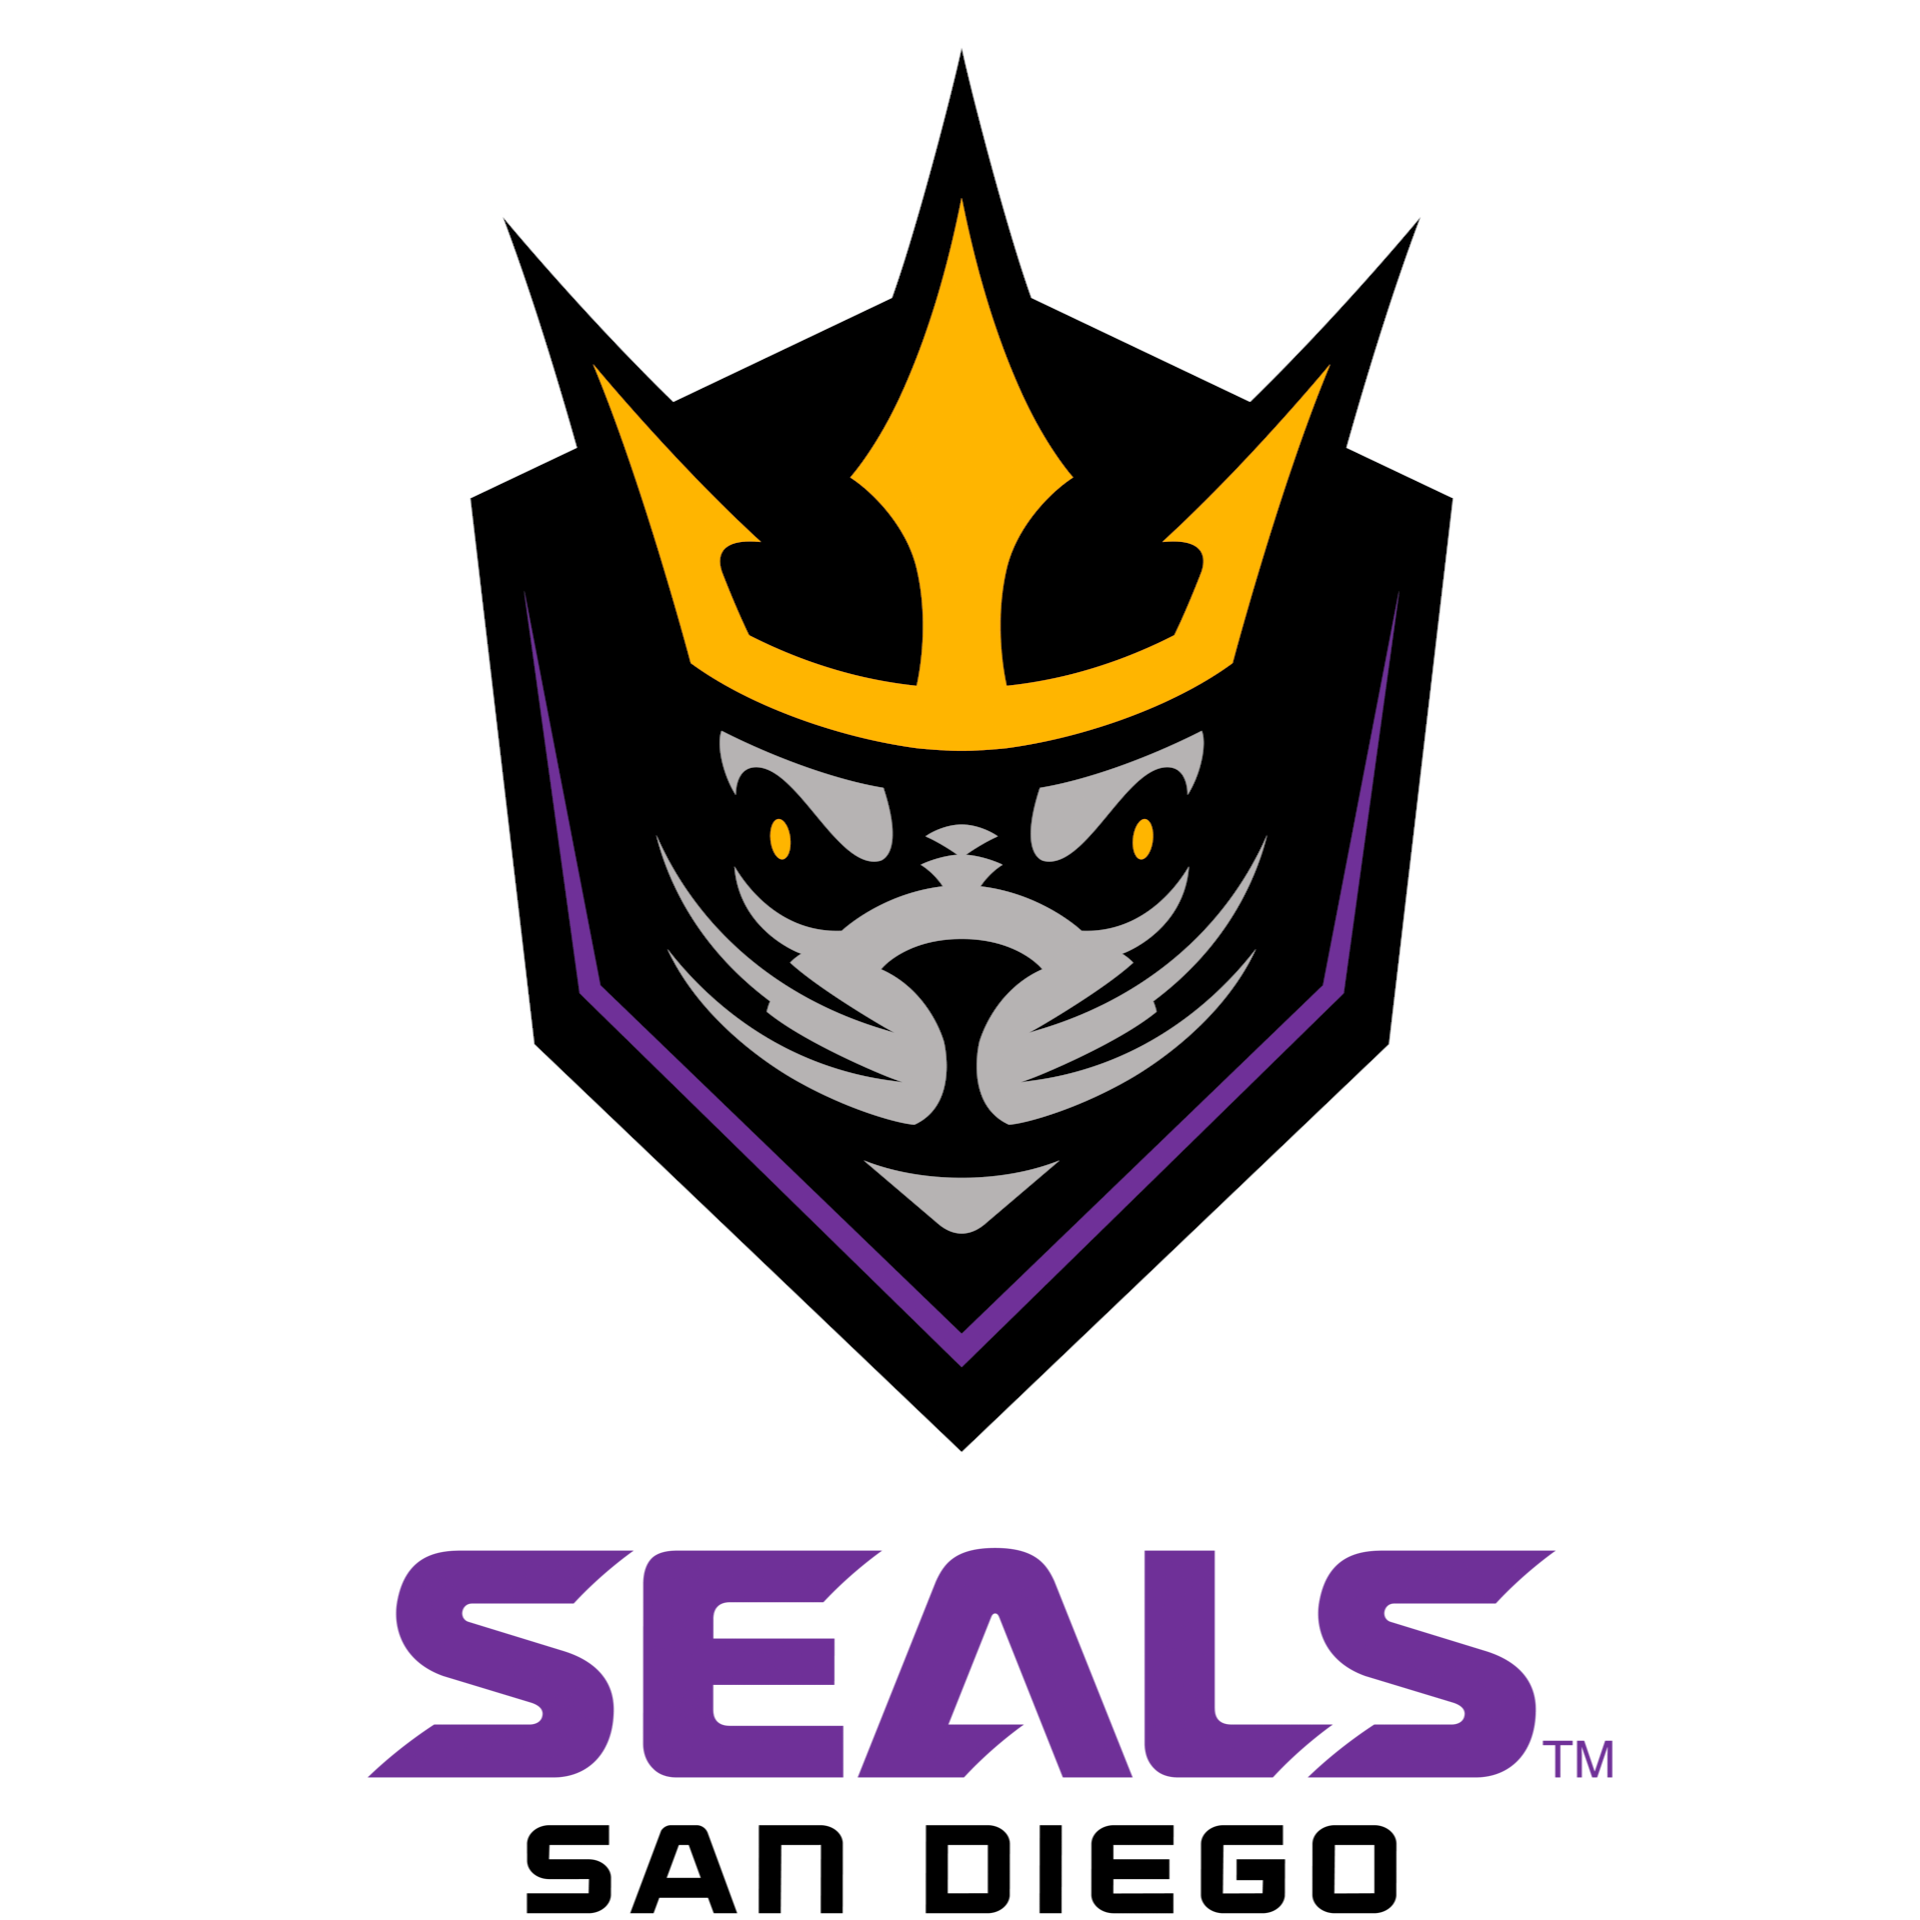 San Diego Seals logo